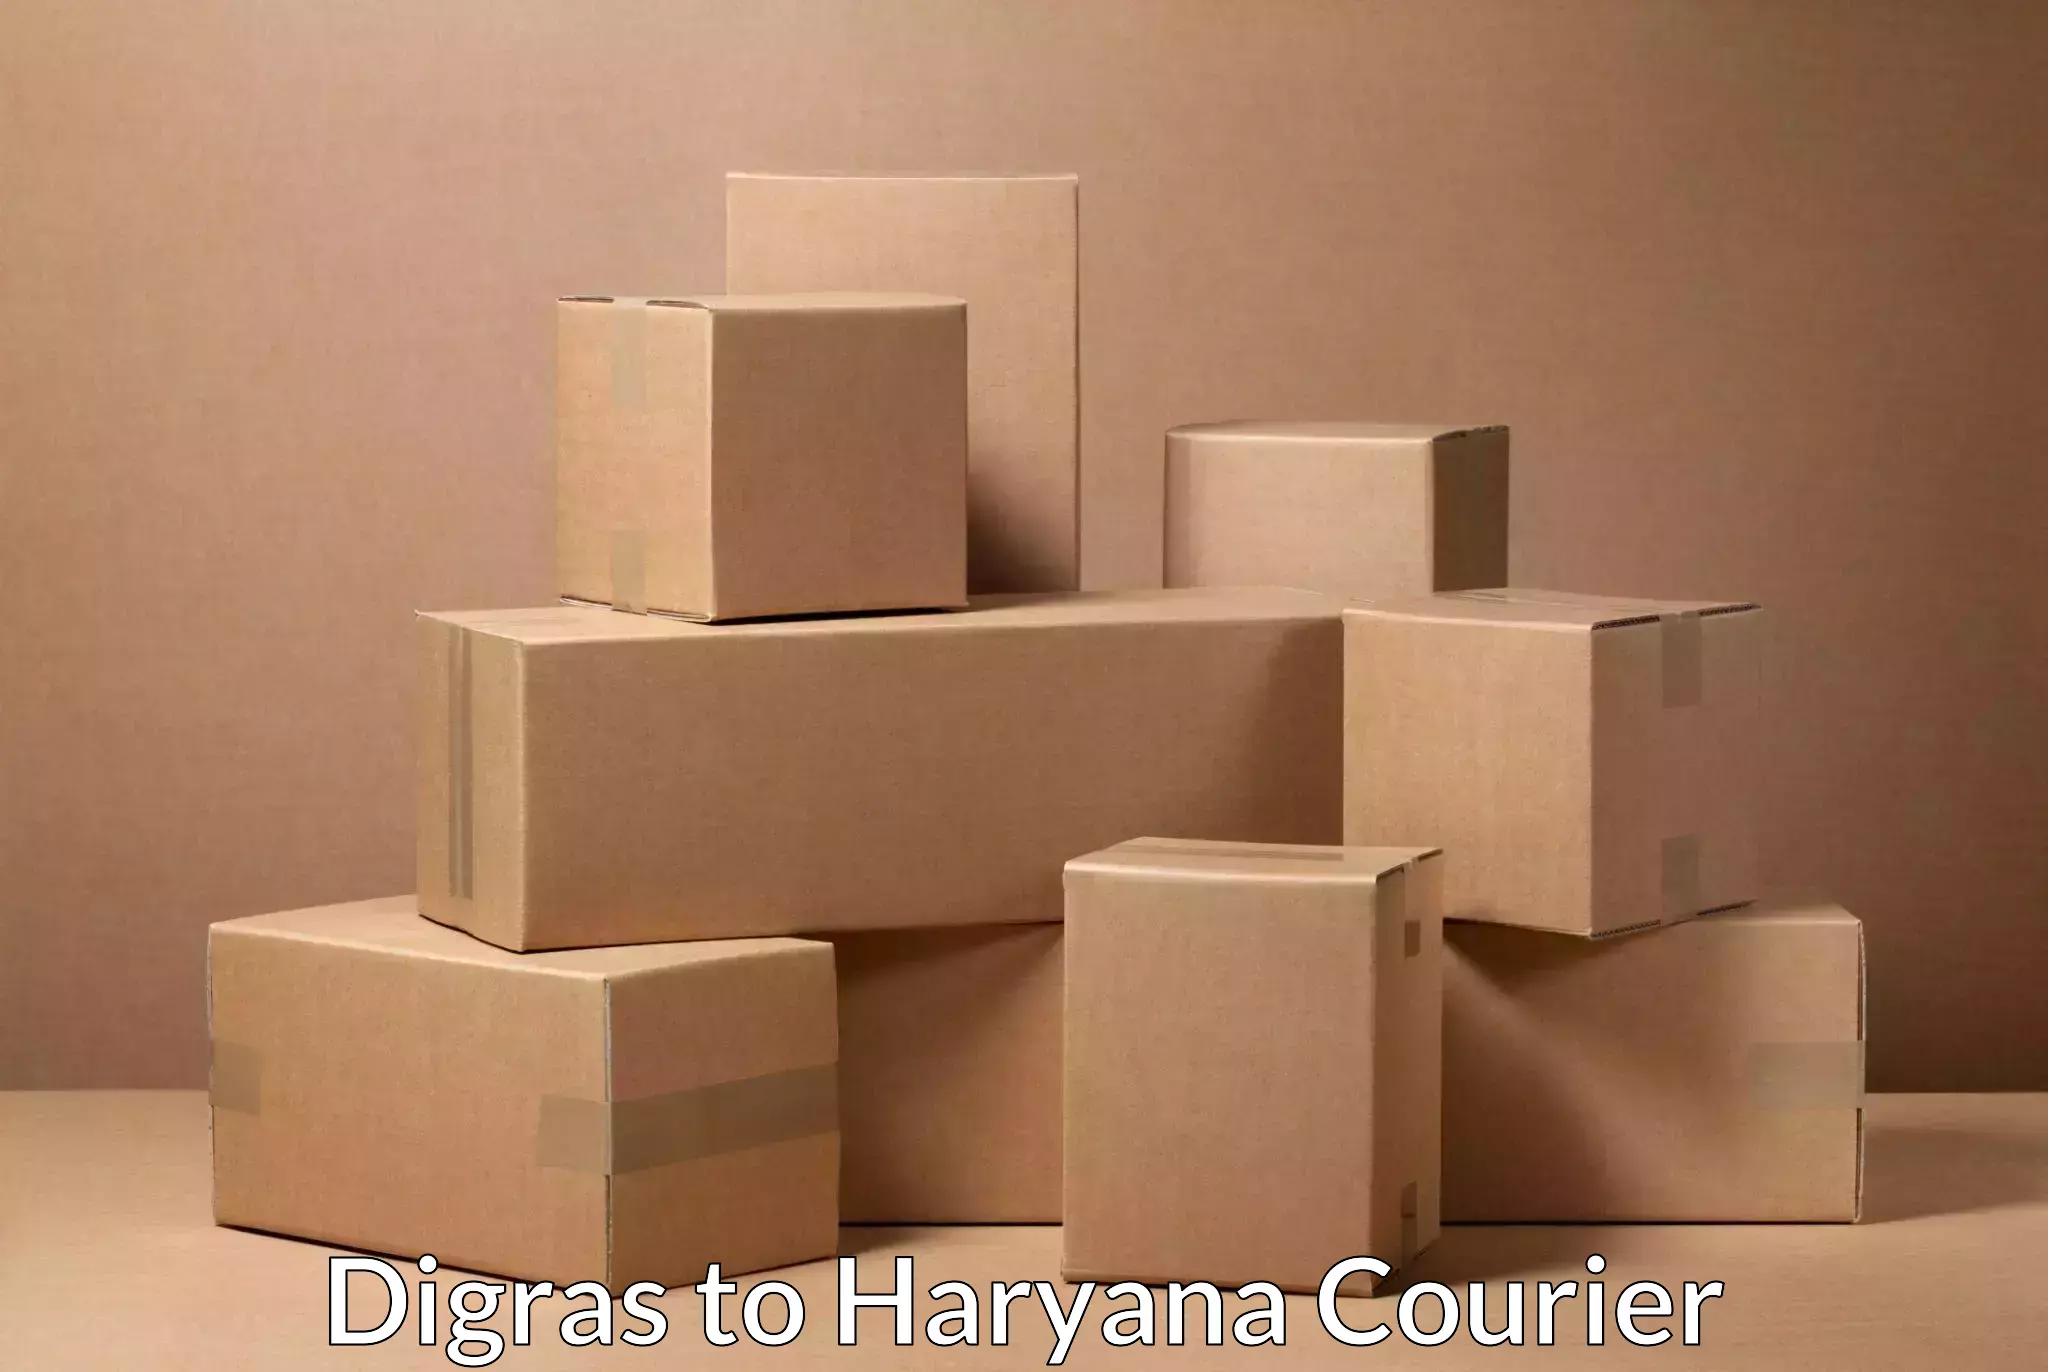 Logistics efficiency Digras to Haryana